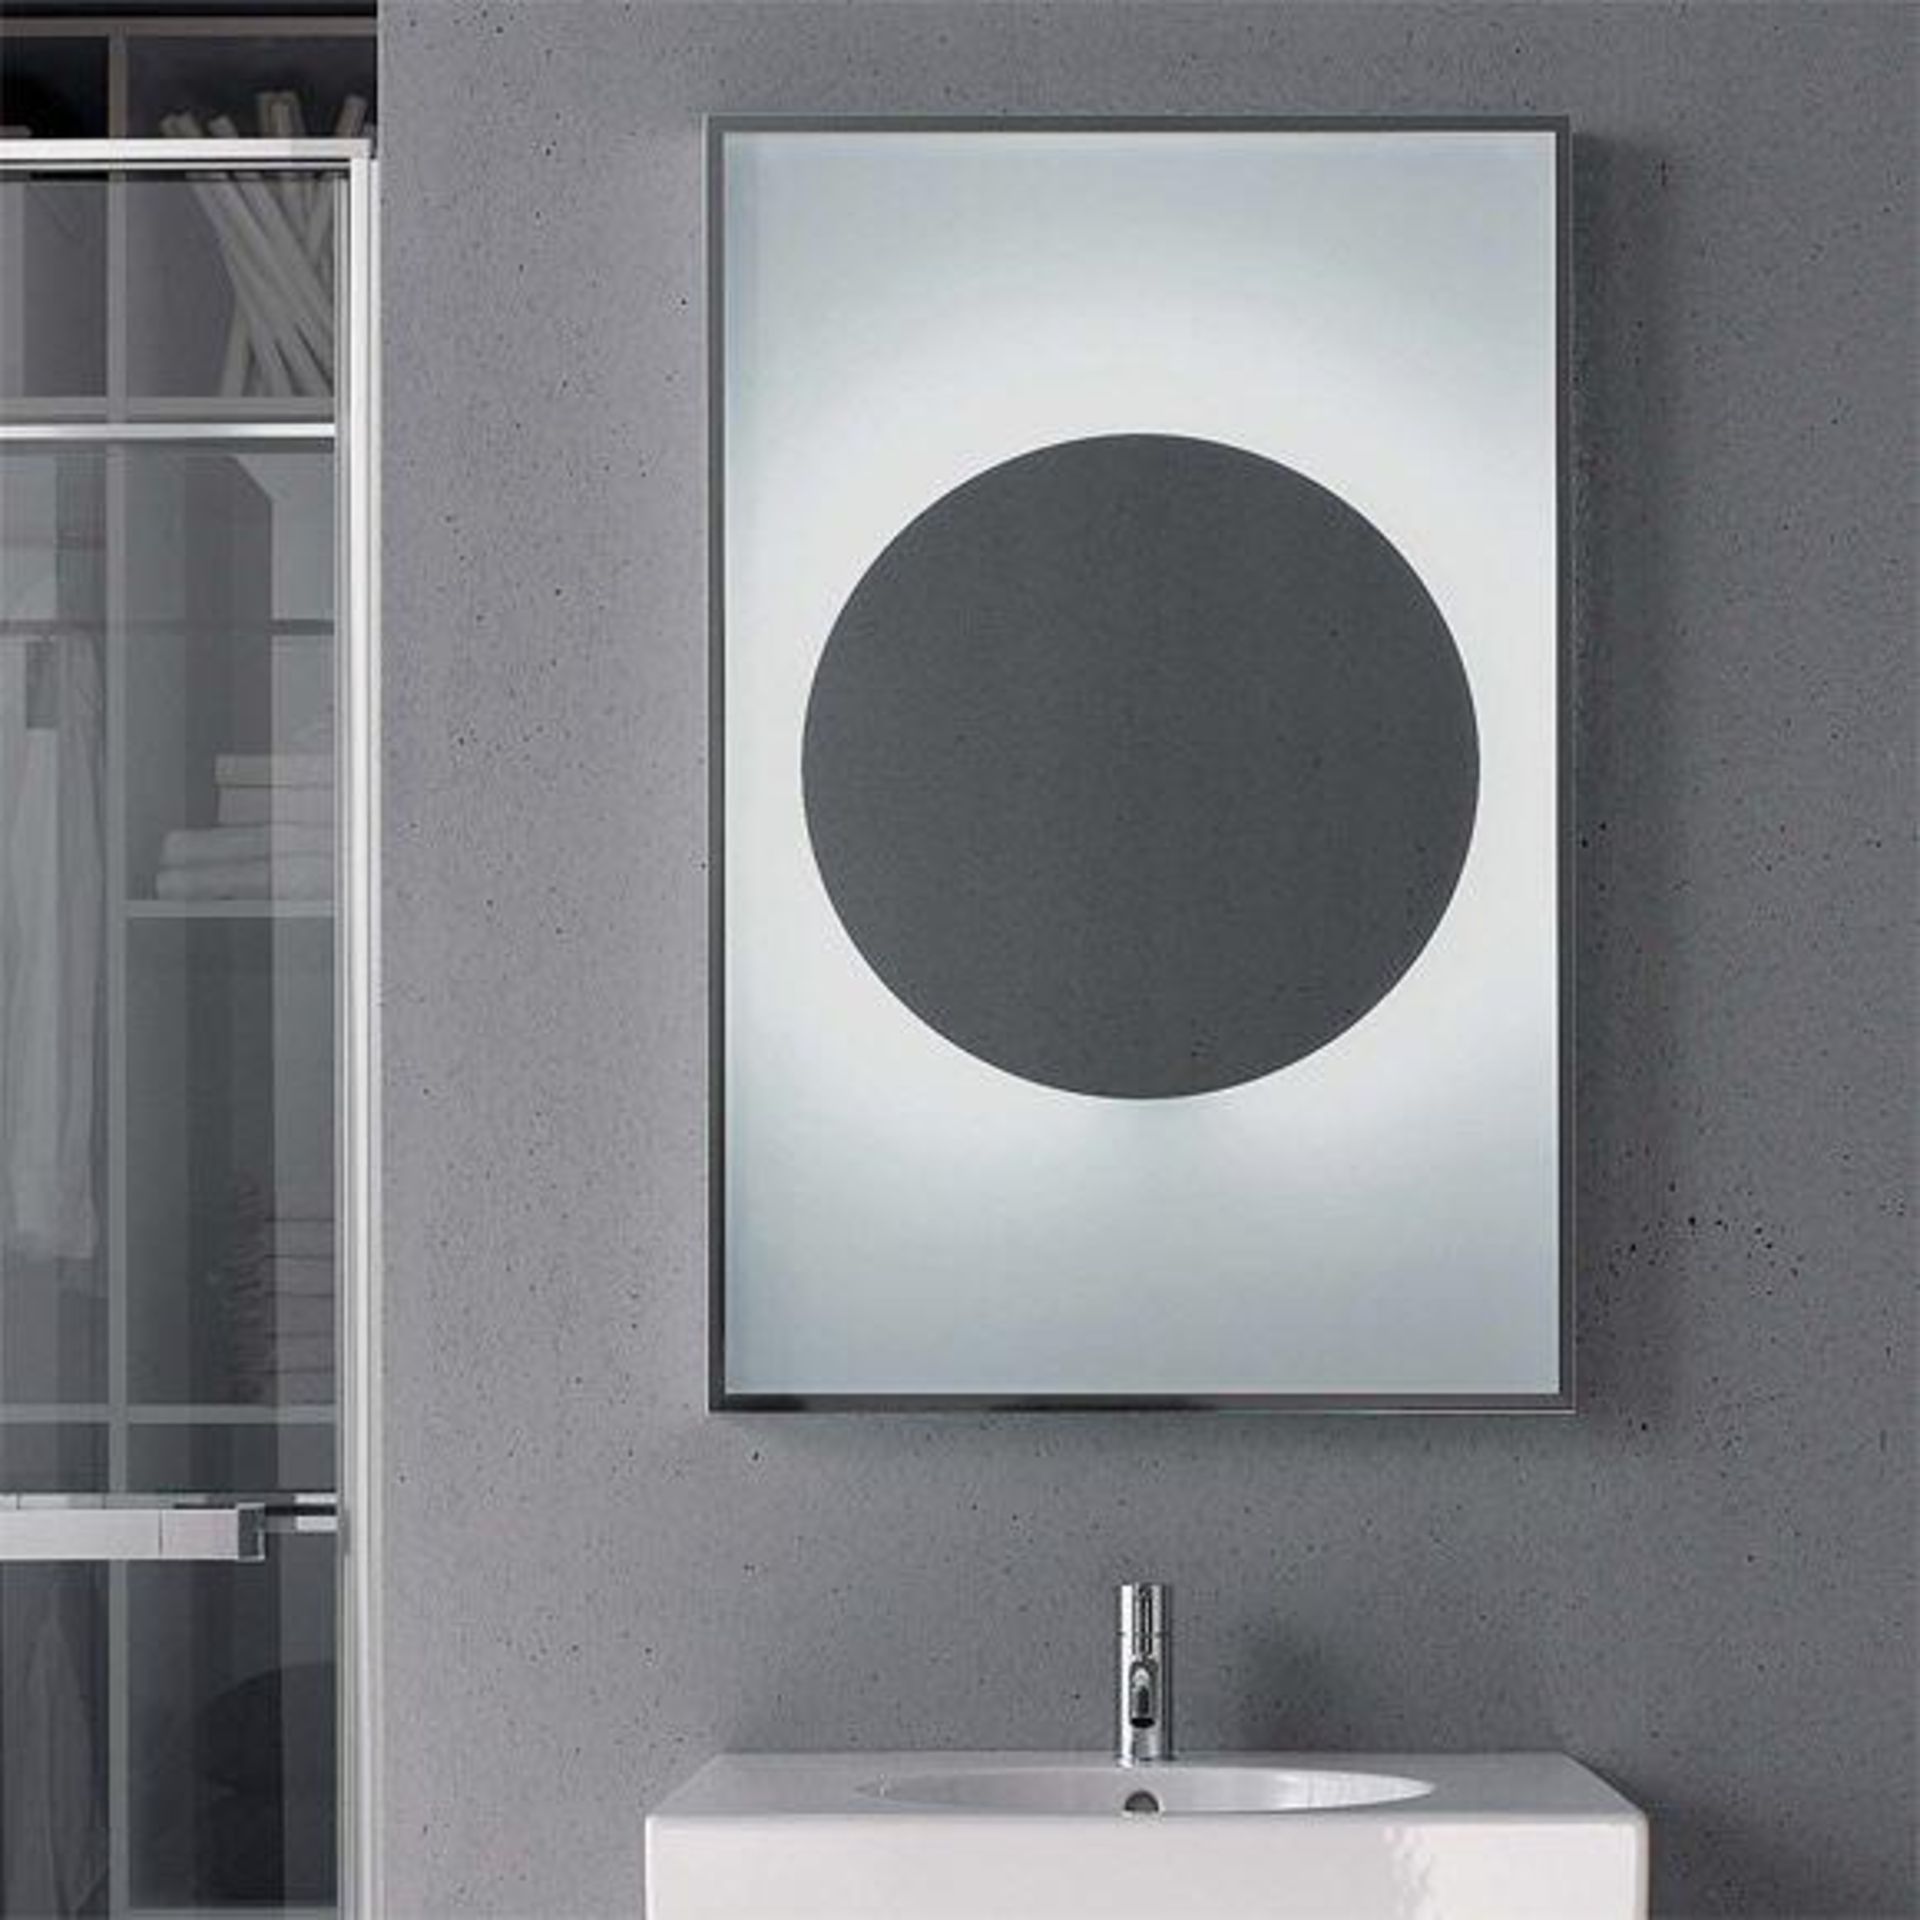 (RR32) KERAMAG 600x900mm Presciosa ll Illuminated Mirror. RRP £554.99 The aesthetics of stripp...